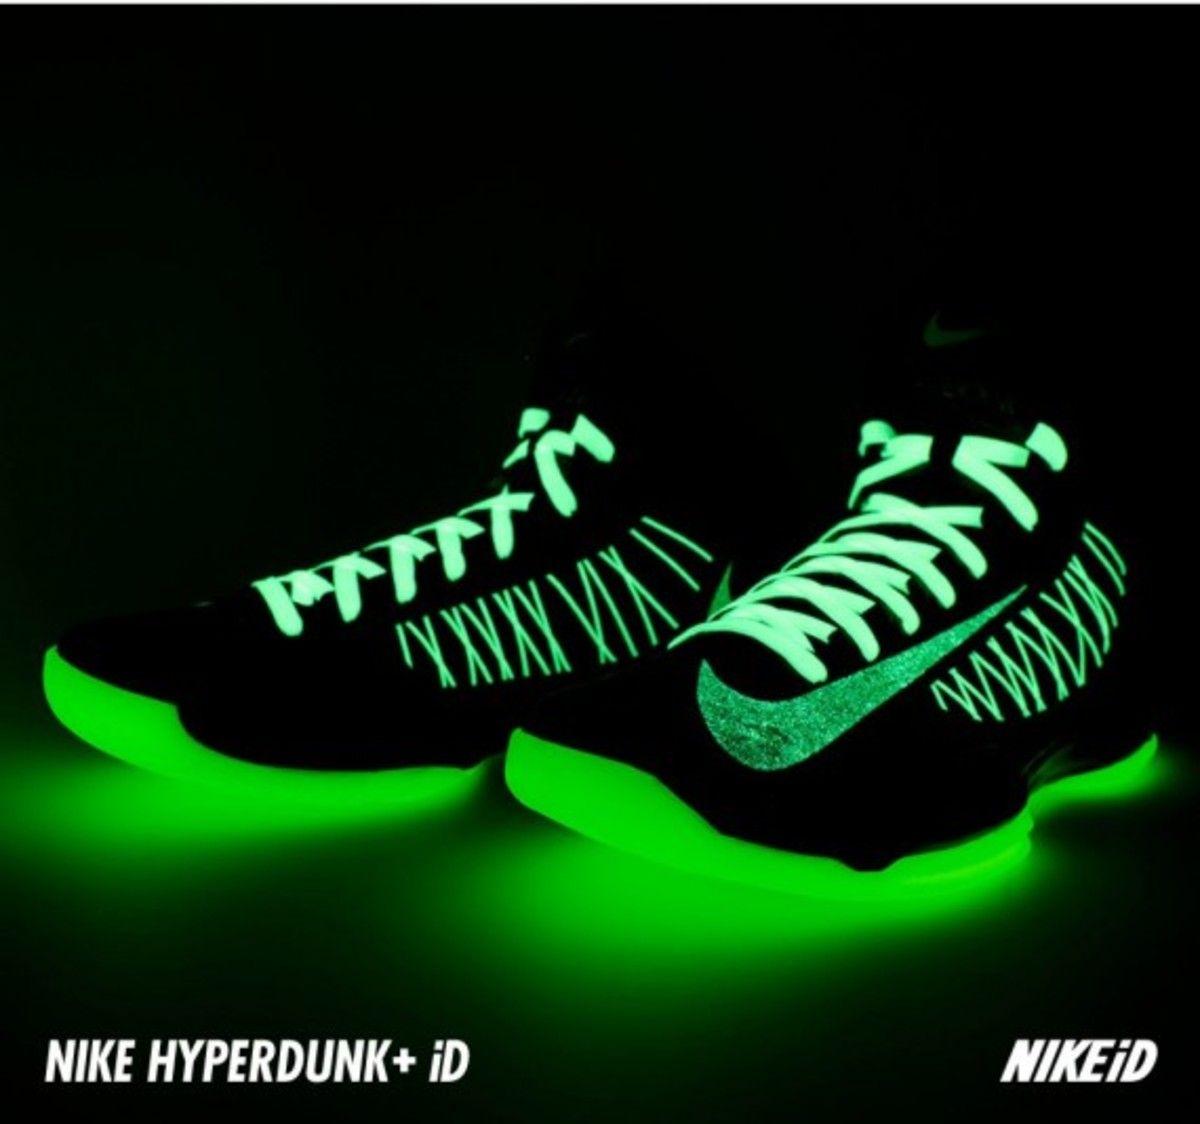 Glow in the Dark Nike Logo - NIKEiD Hyperdunk+ iD - Glow in the Dark Design Option - Freshness Mag